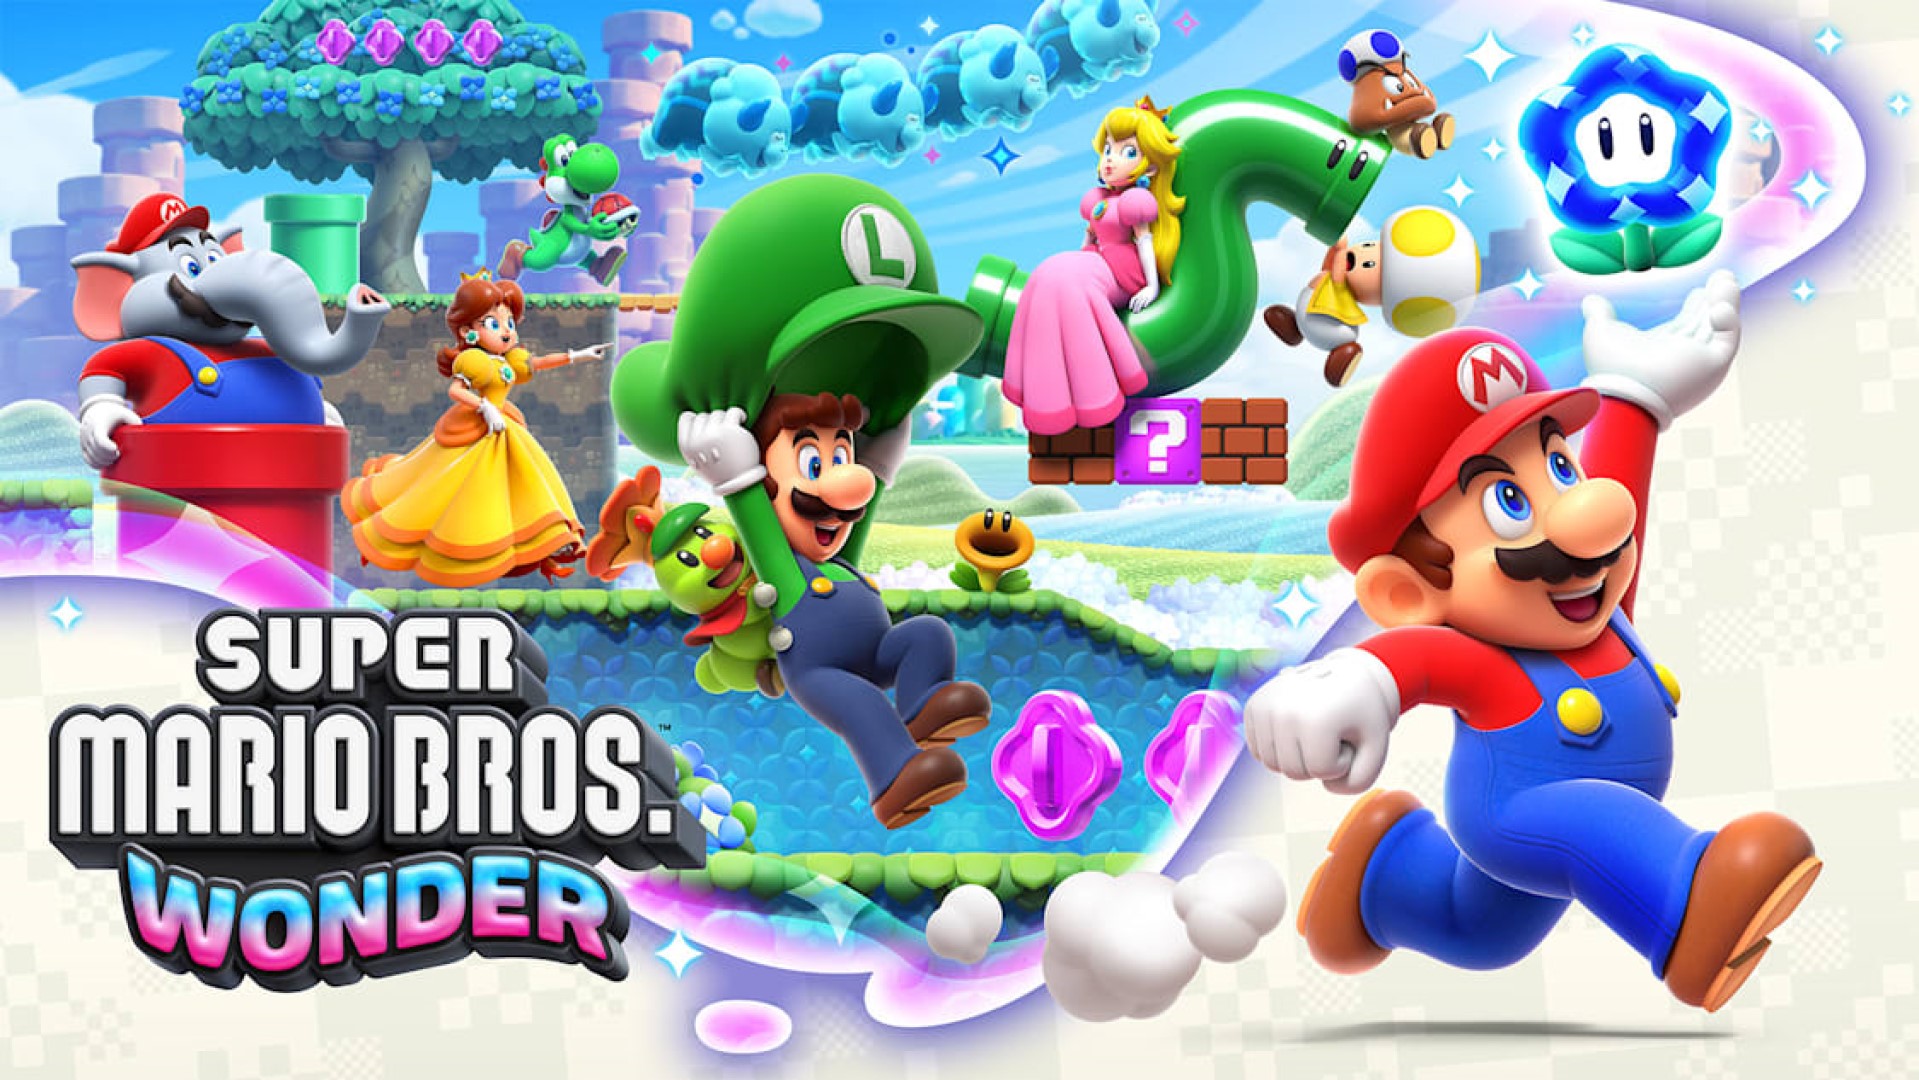 Super Mario Bros. Wonder’s File Size is 4.5 GB